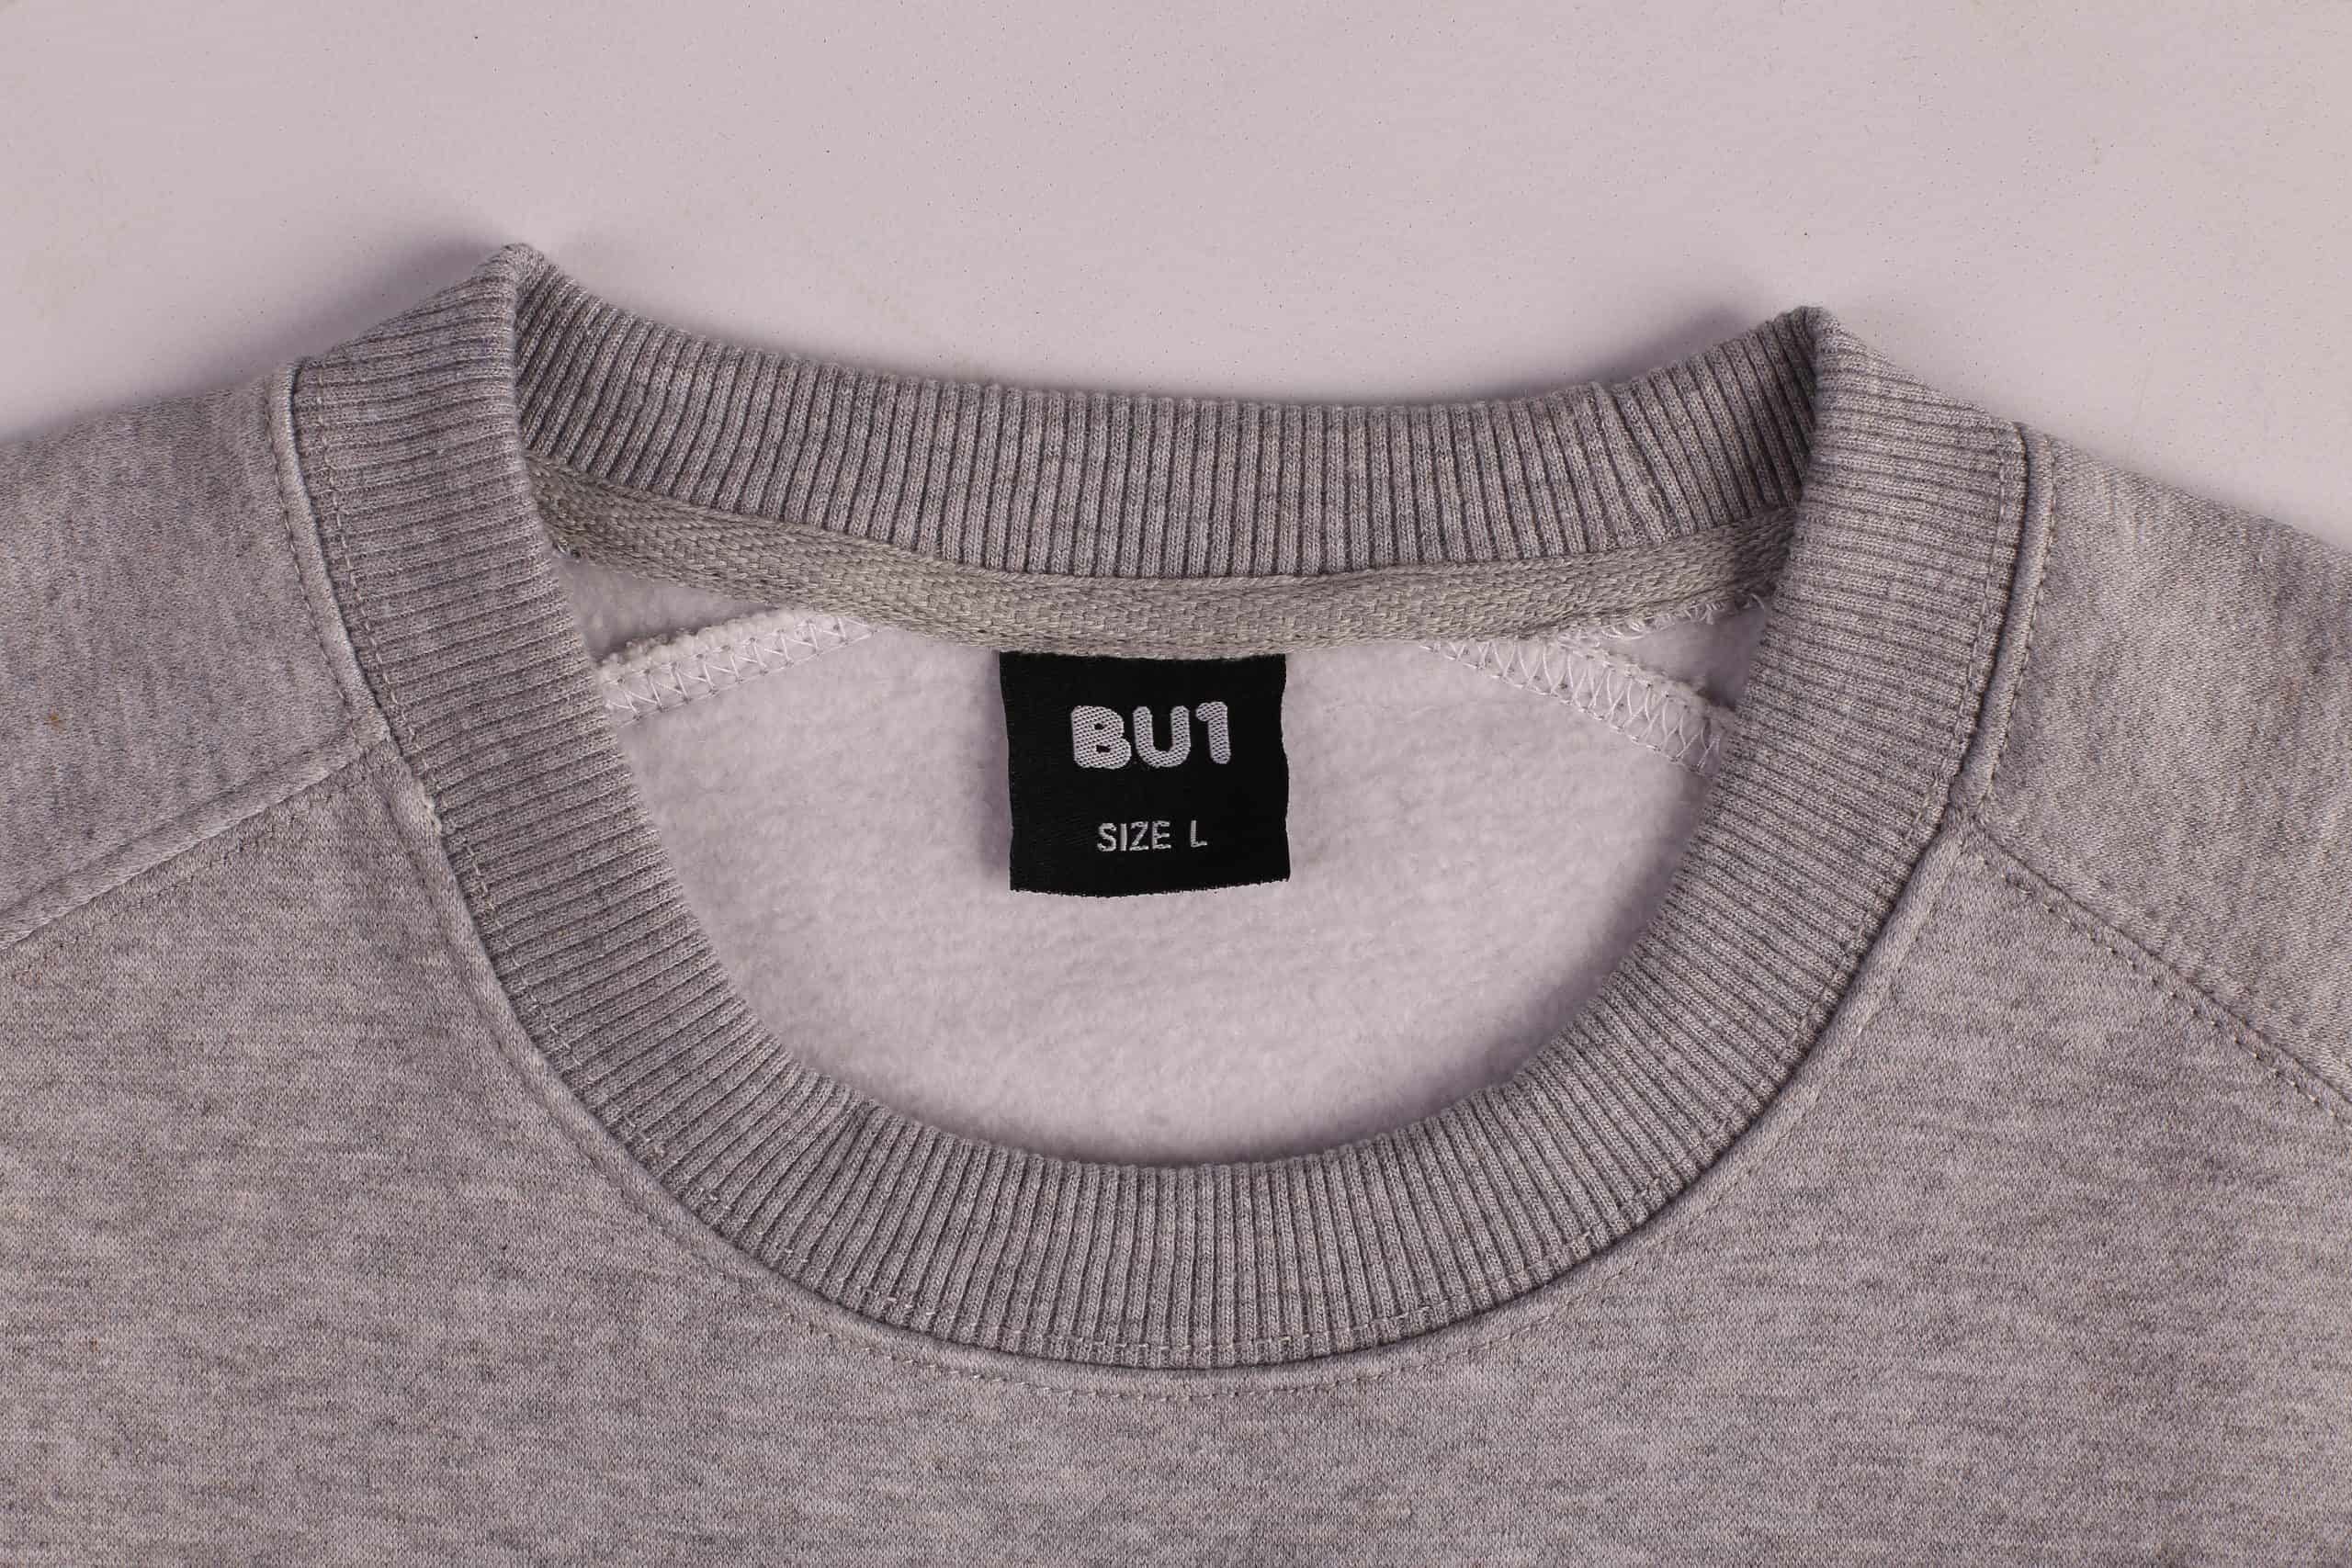 BU1 sweatshirt gray #BU1GLOVES